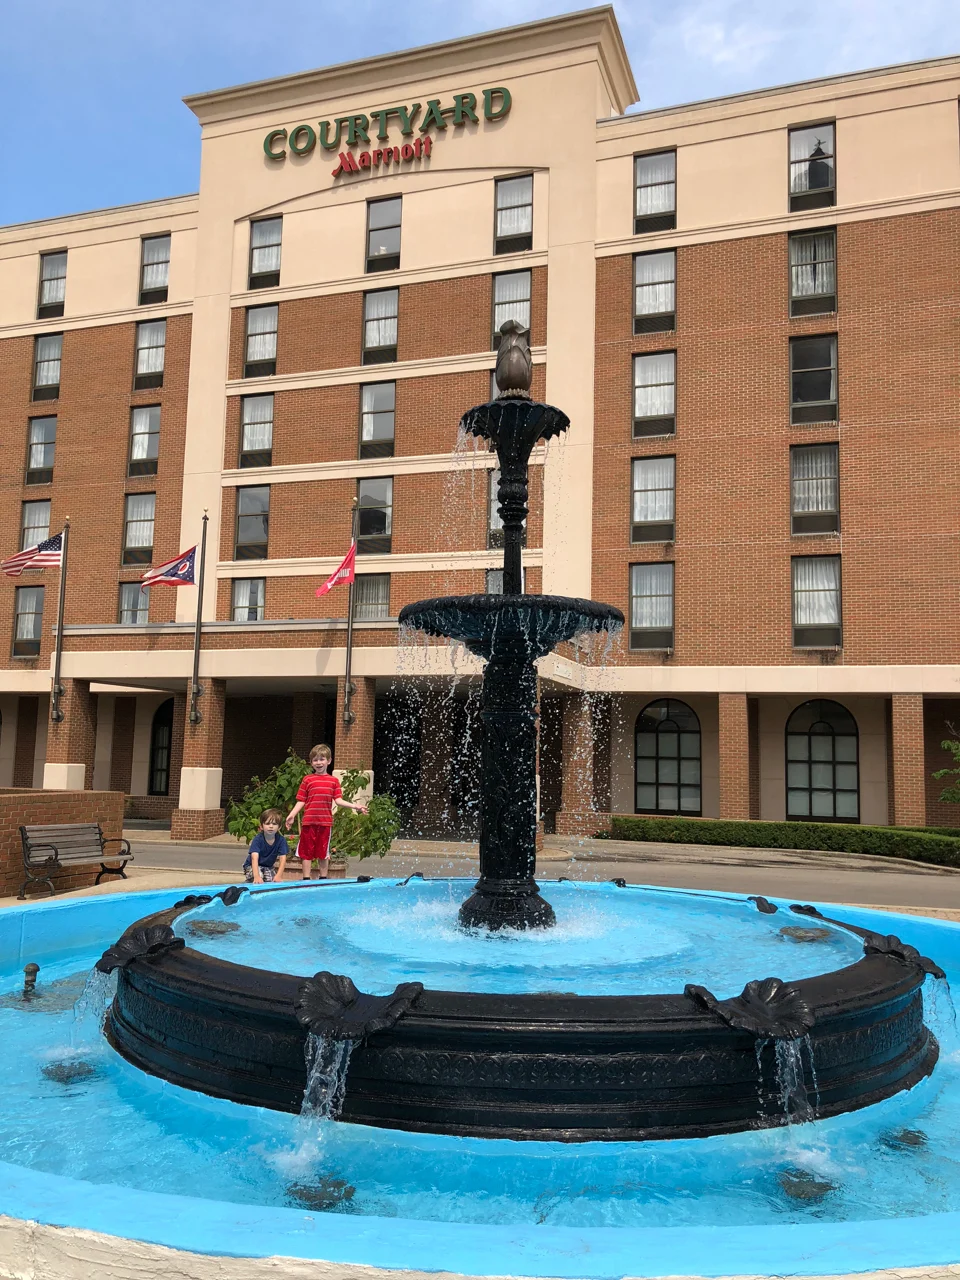 Fountain outside Courtyard Marriott in Springfield, Ohio